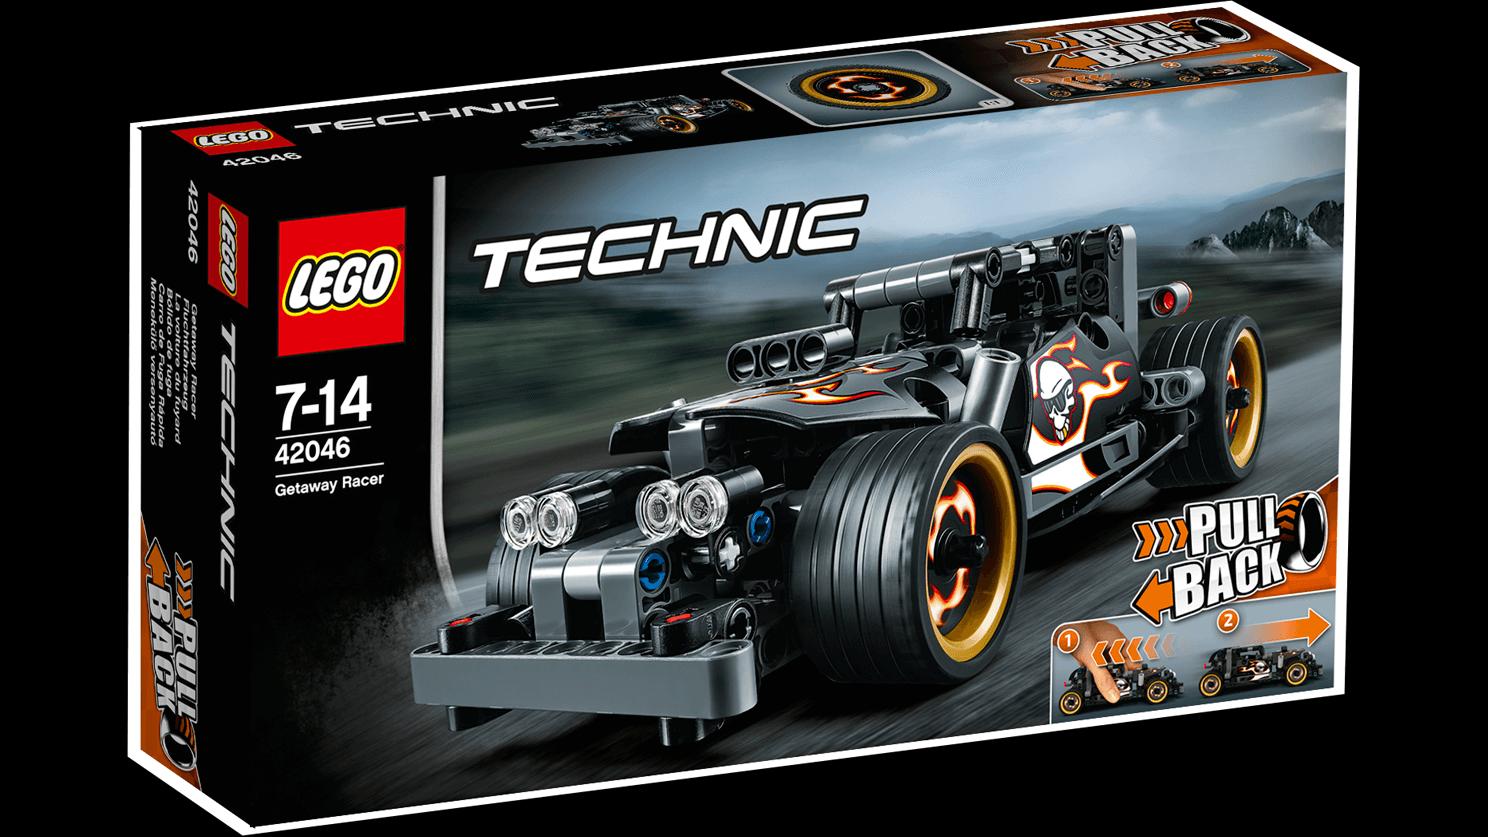 Lego Masina de curse de evadare 7-14 ani 